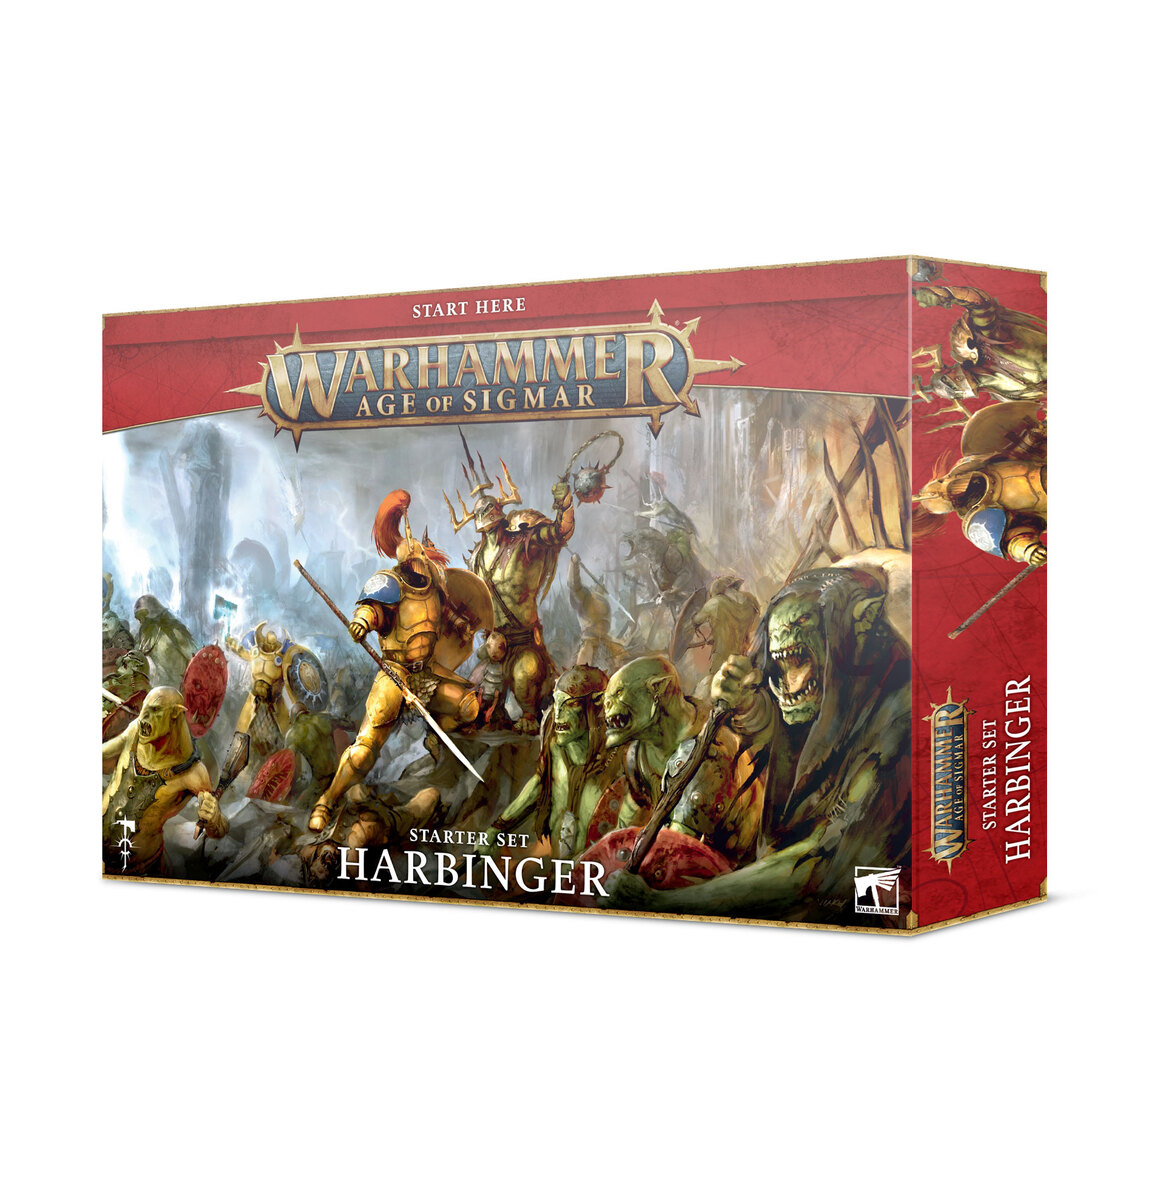 Warhammer Age of Sigmar Harbinger Starter Box